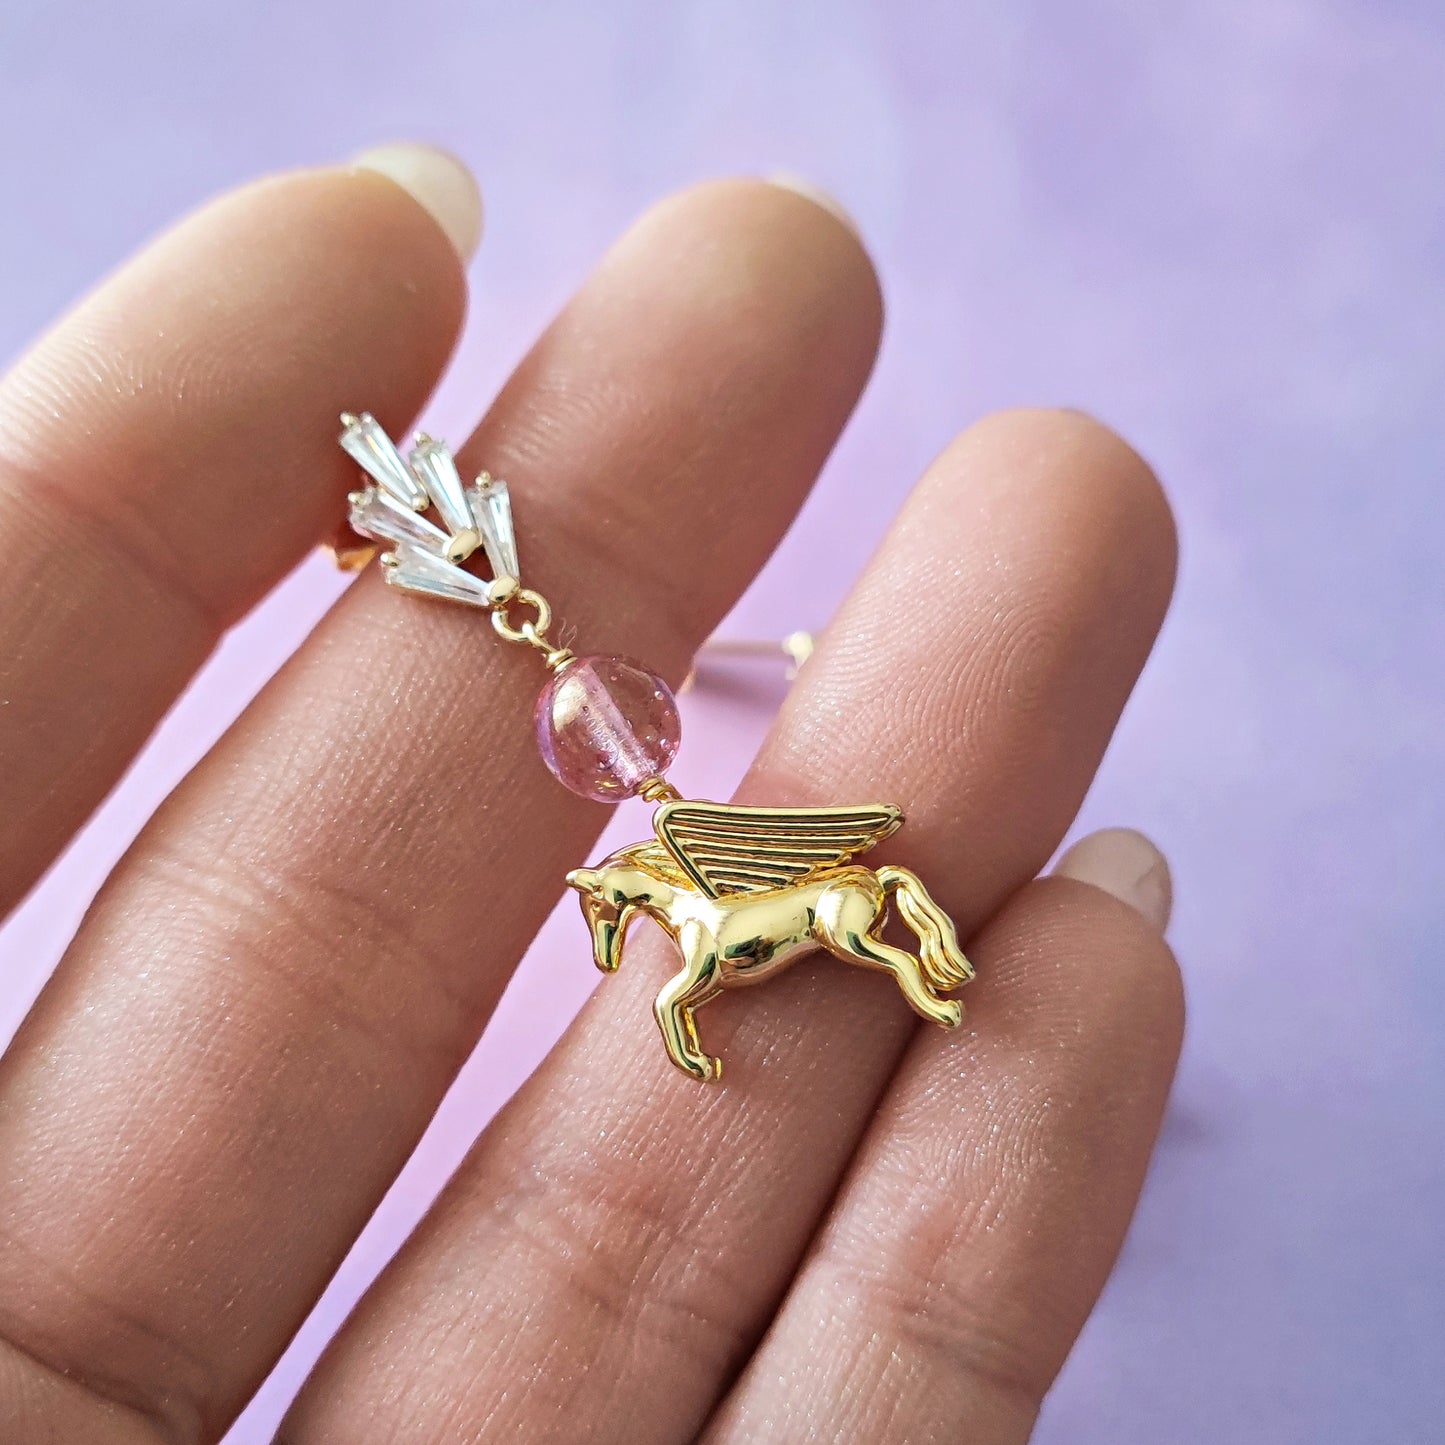 Cute "Pegasus" dangling earrings with crystals